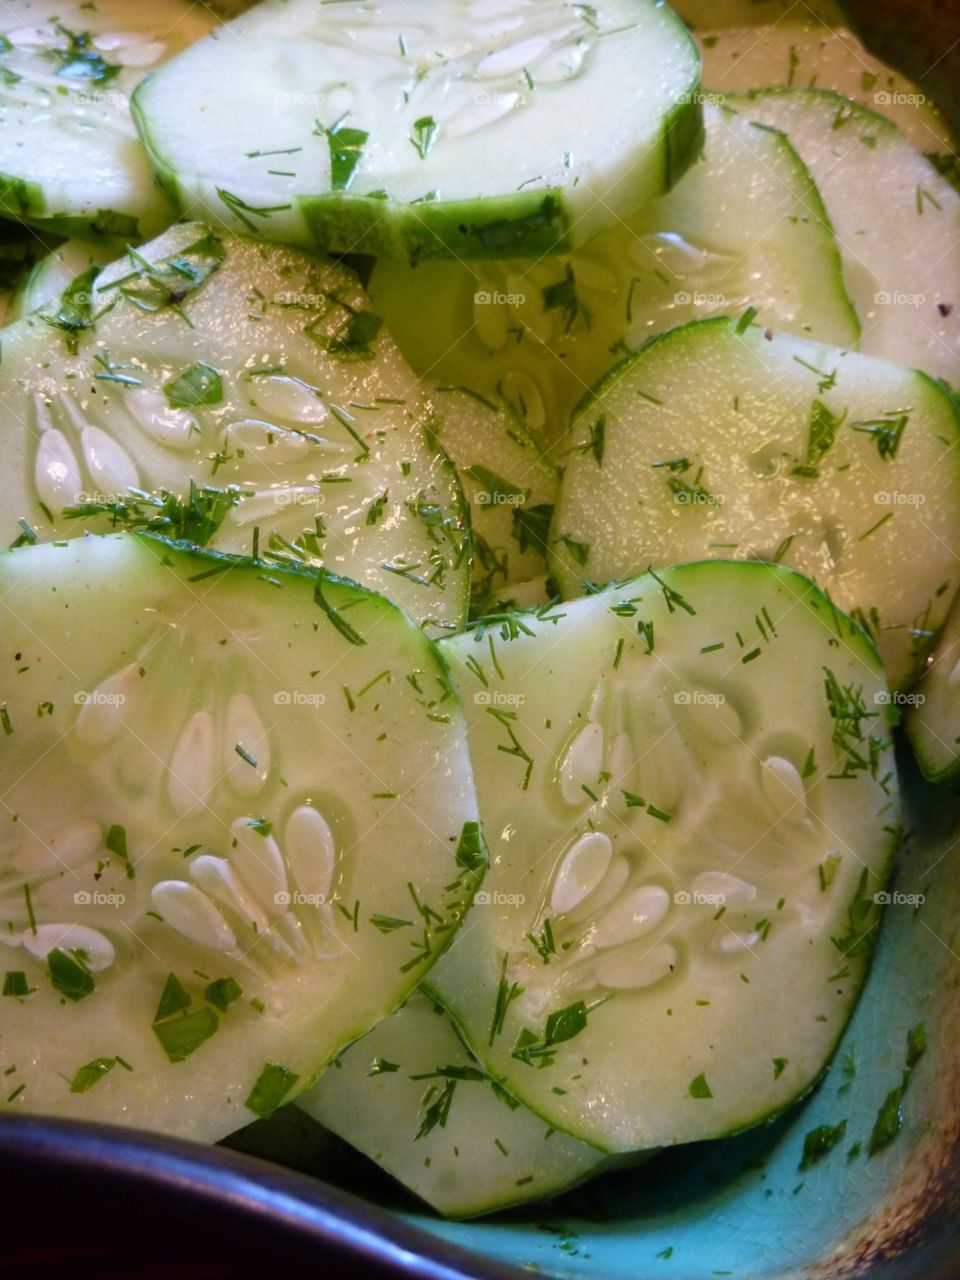 Cucumber herb salad